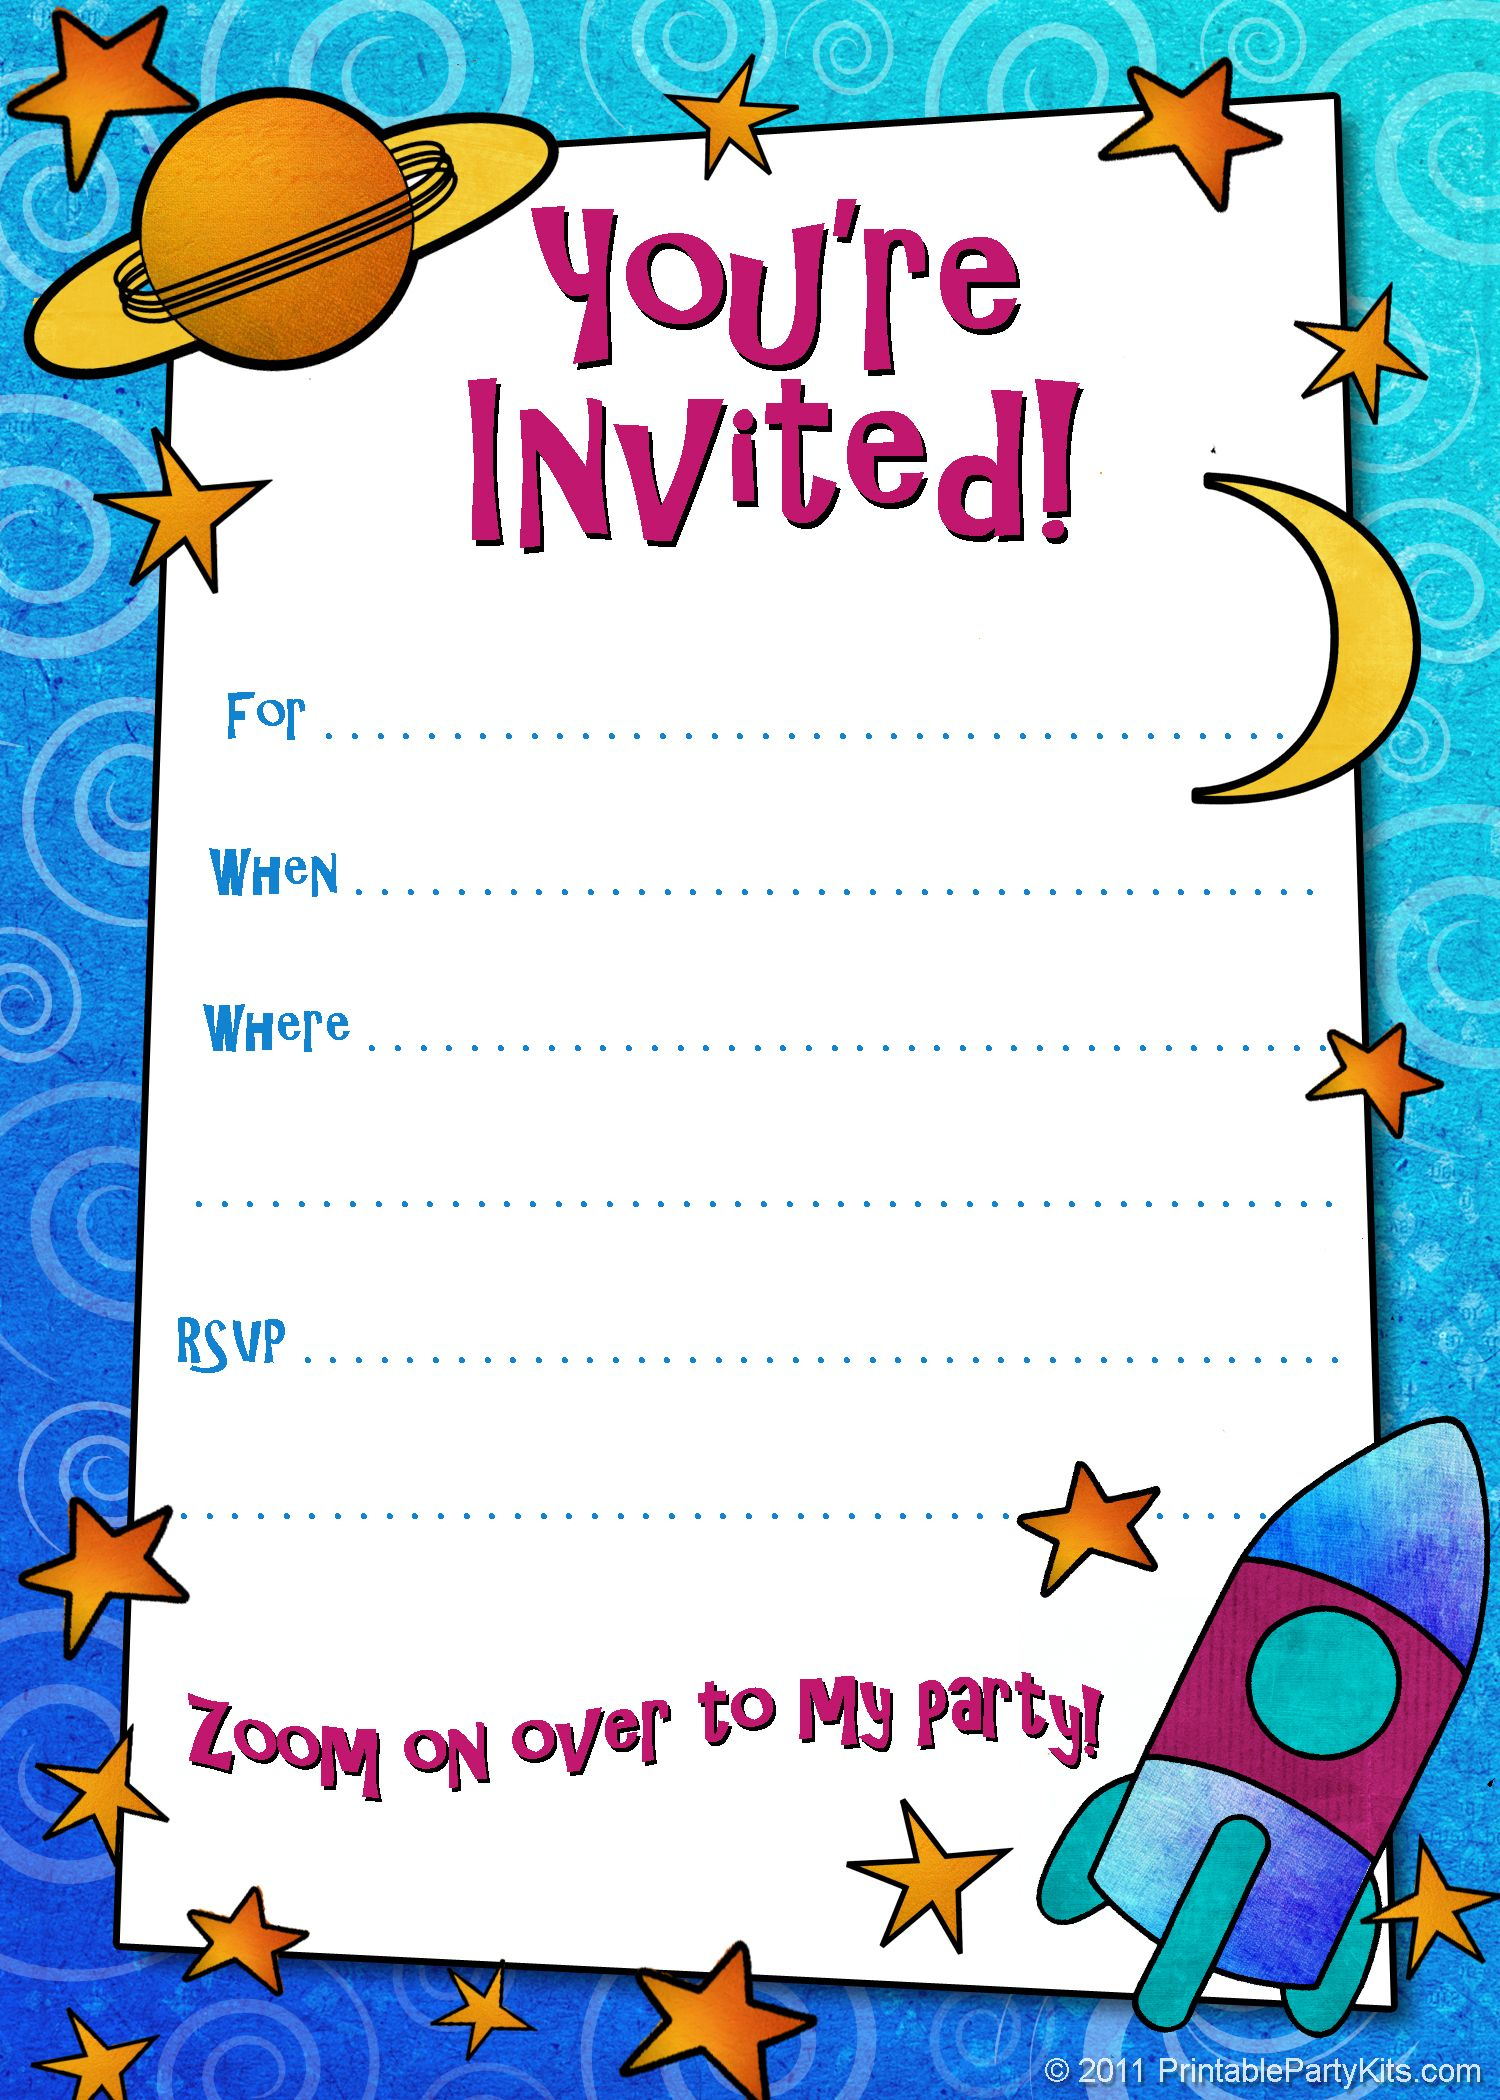 Free Printable Boys Birthday Party Invitations | Birthday Party - Make Your Own Birthday Party Invitations Free Printable